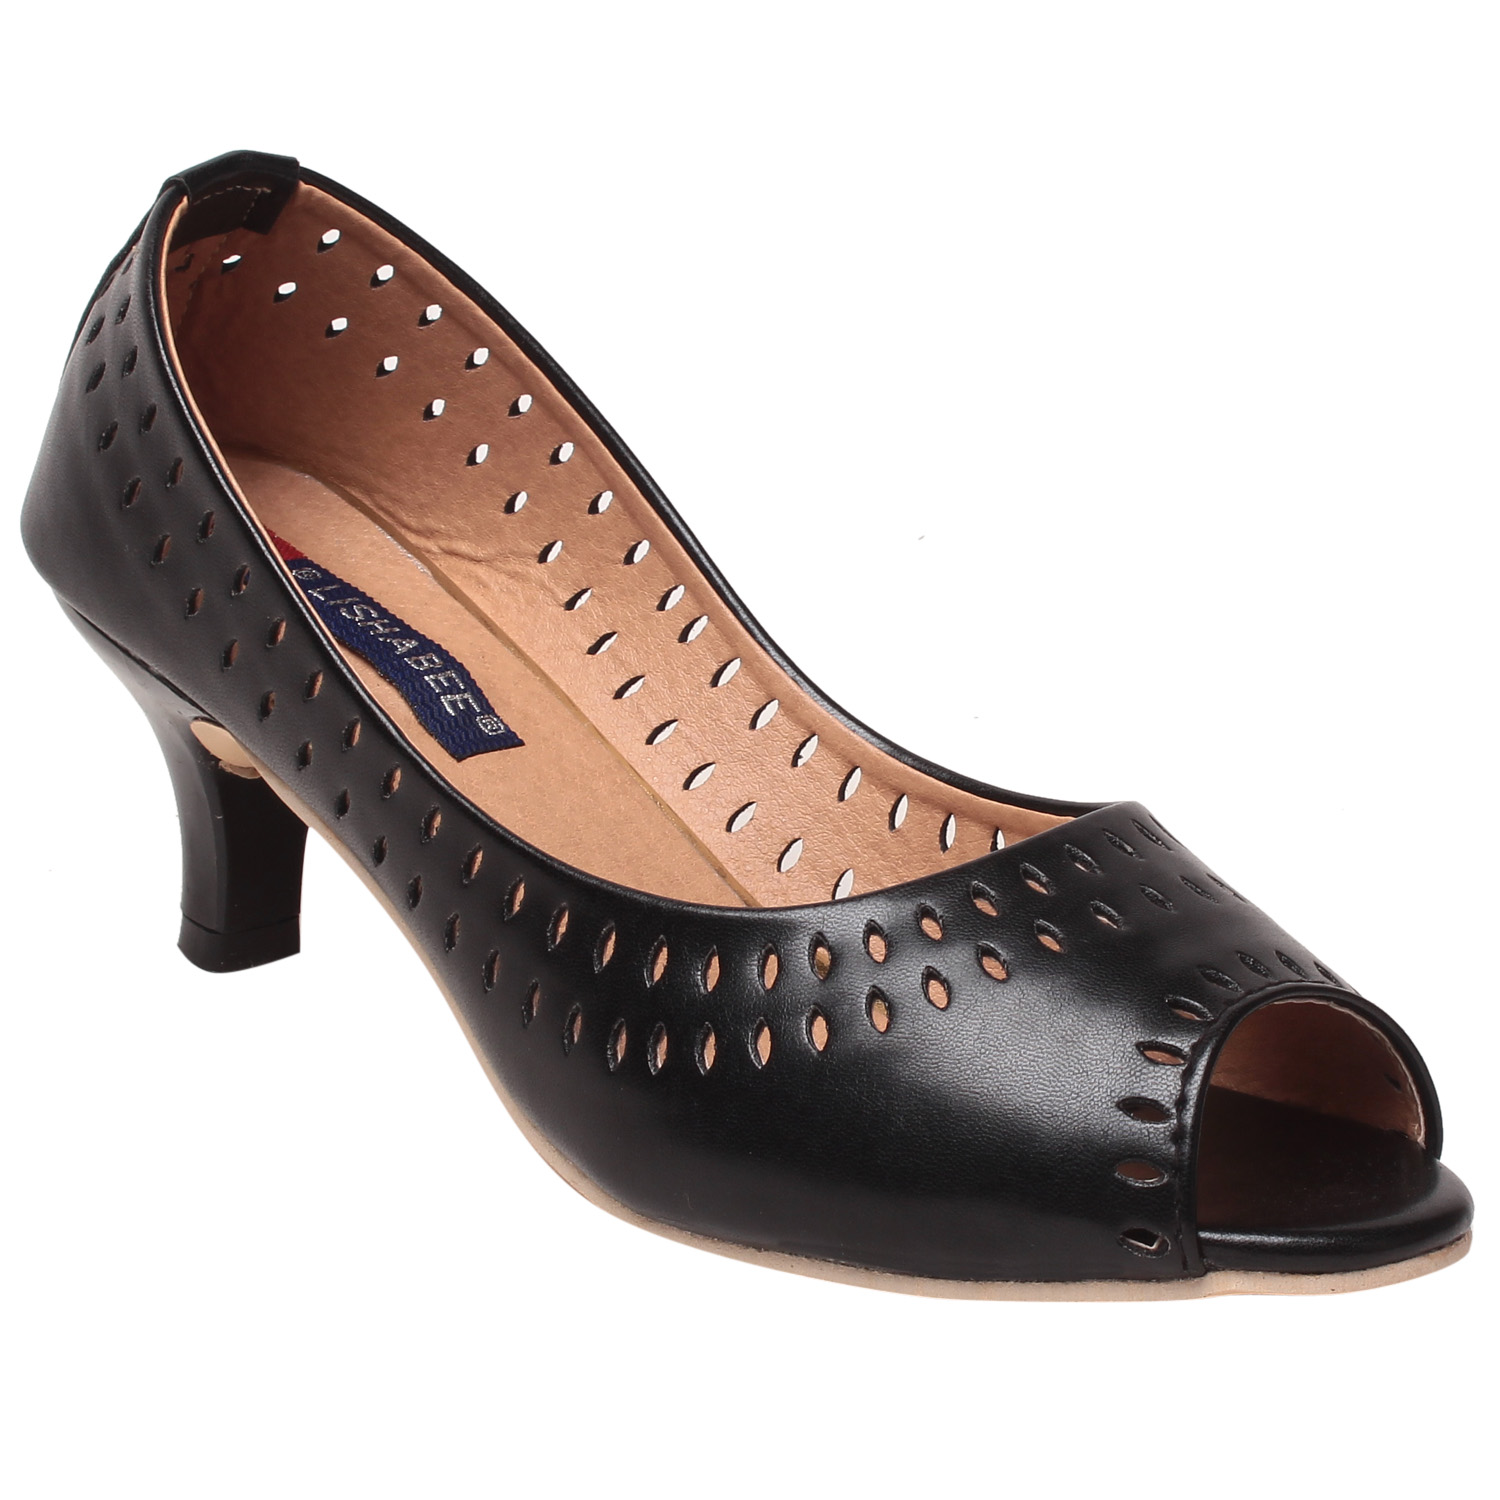 Buy MSC Women's Black Heels Online @ ₹839 from ShopClues